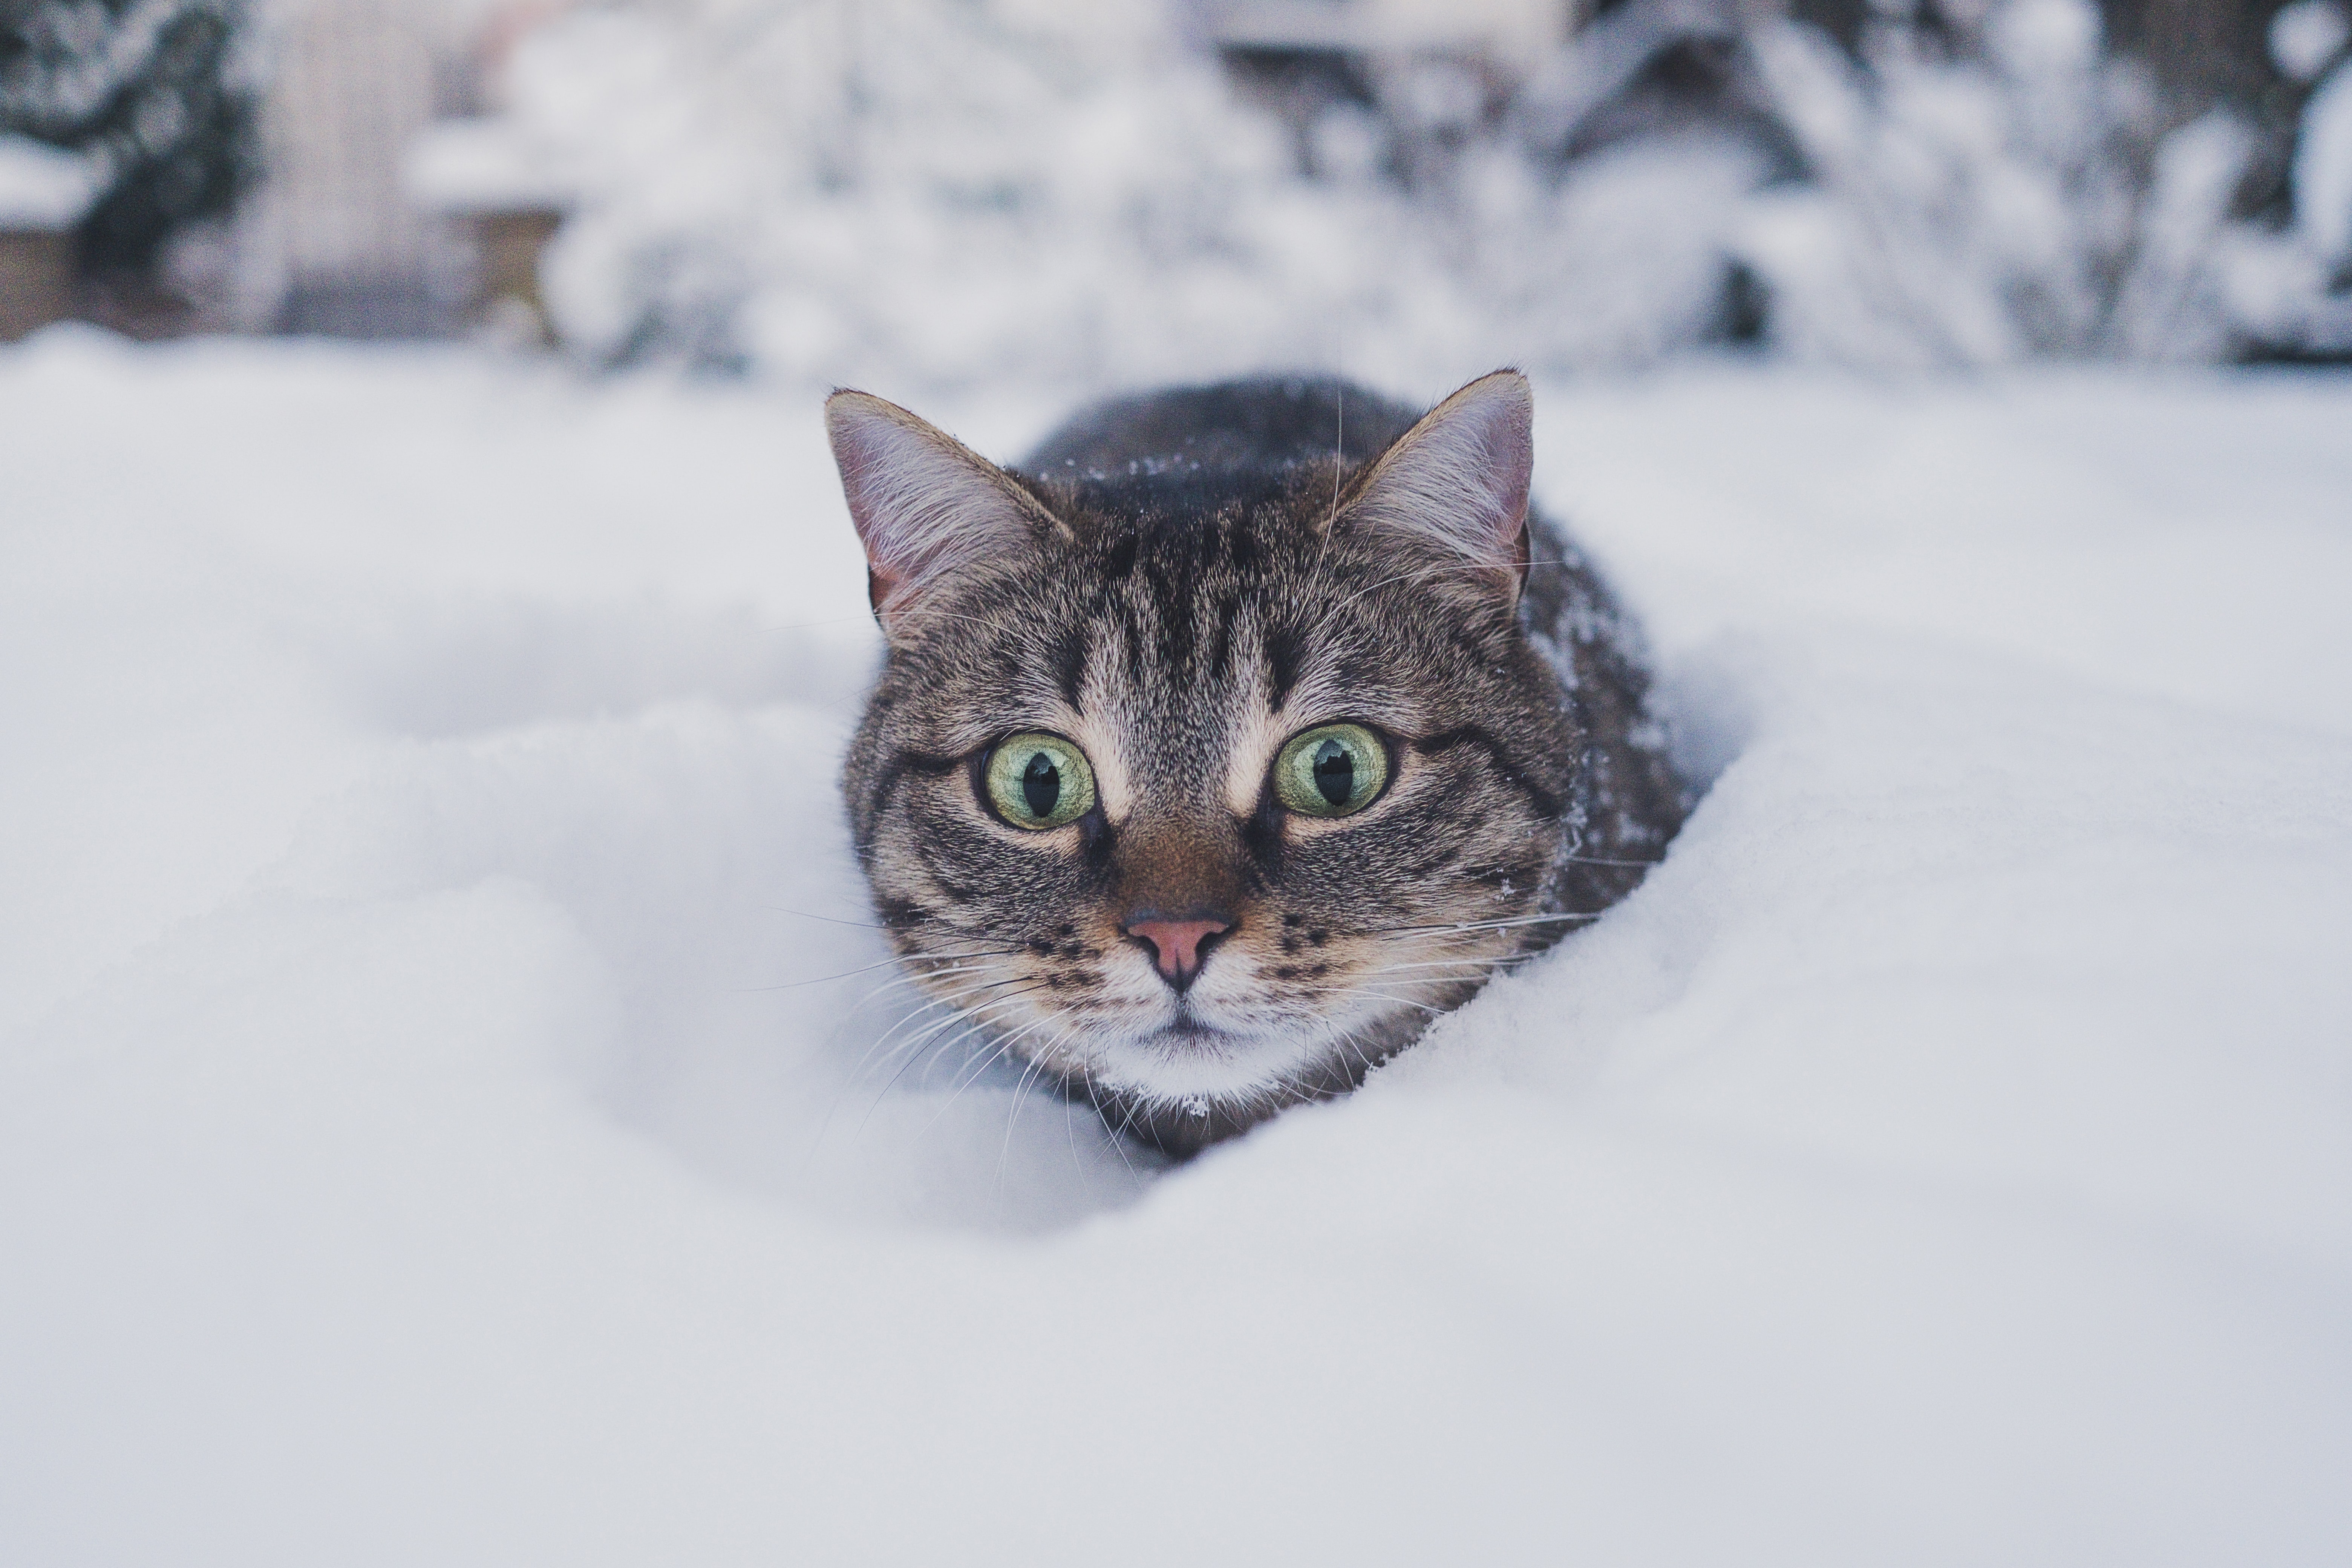 Descarga gratuita de fondo de pantalla para móvil de Gato, Mascota, Opinión, Invierno, Nieve, Visión, Gracioso, Animales.